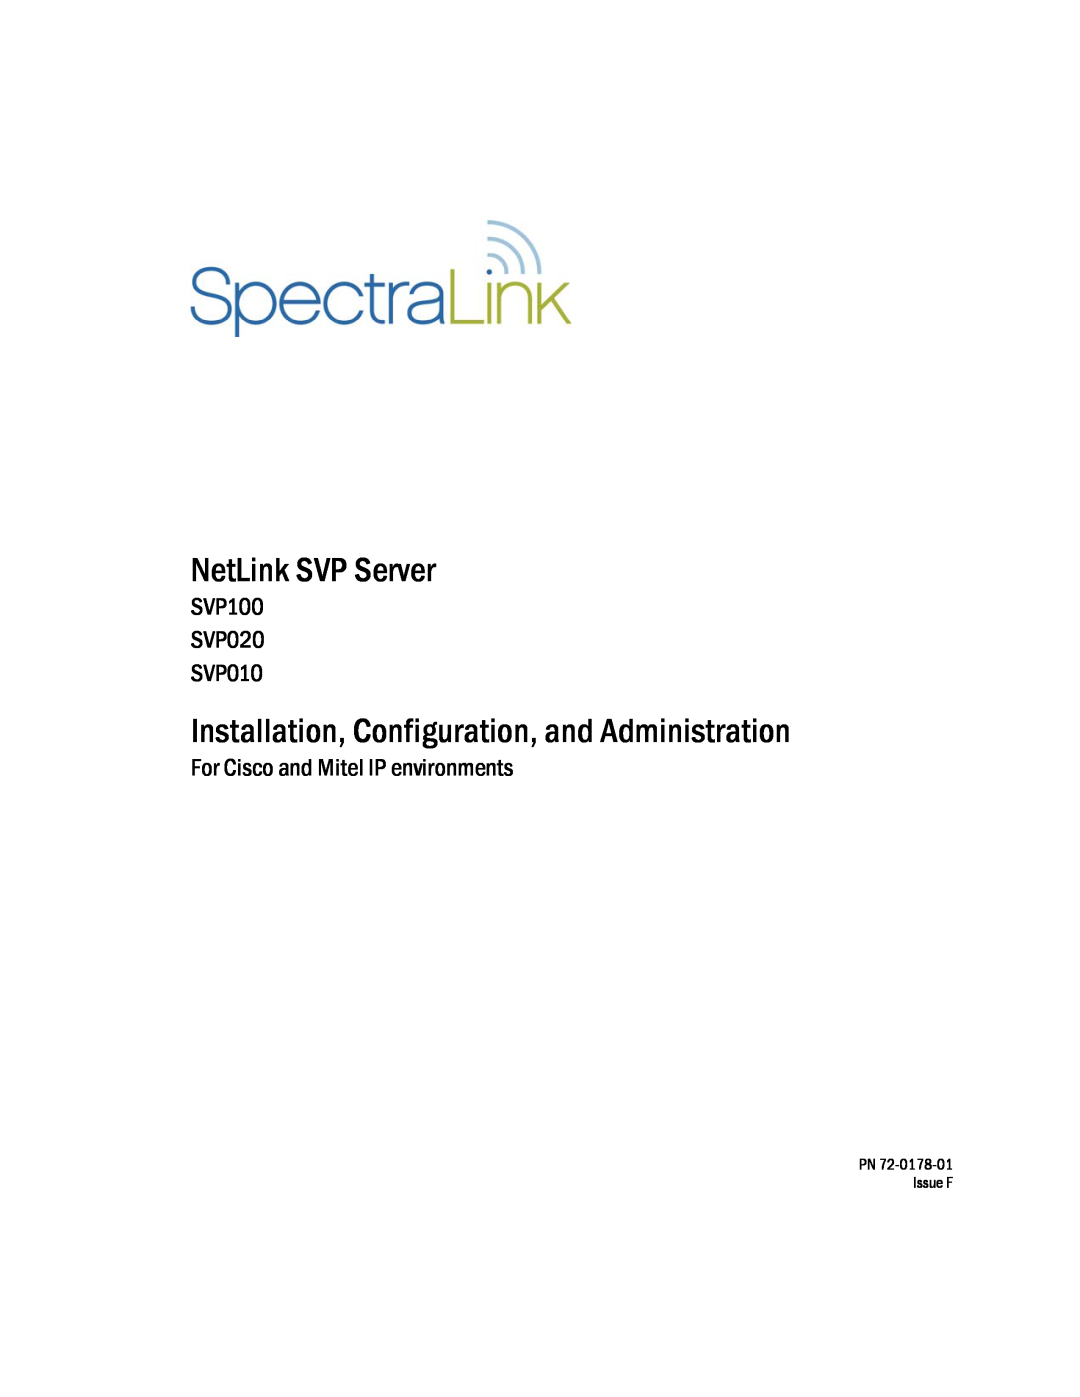 SpectraLink manual NetLink SVP Server, Installation, Configuration, and Administration, SVP100 SVP020 SVP010 